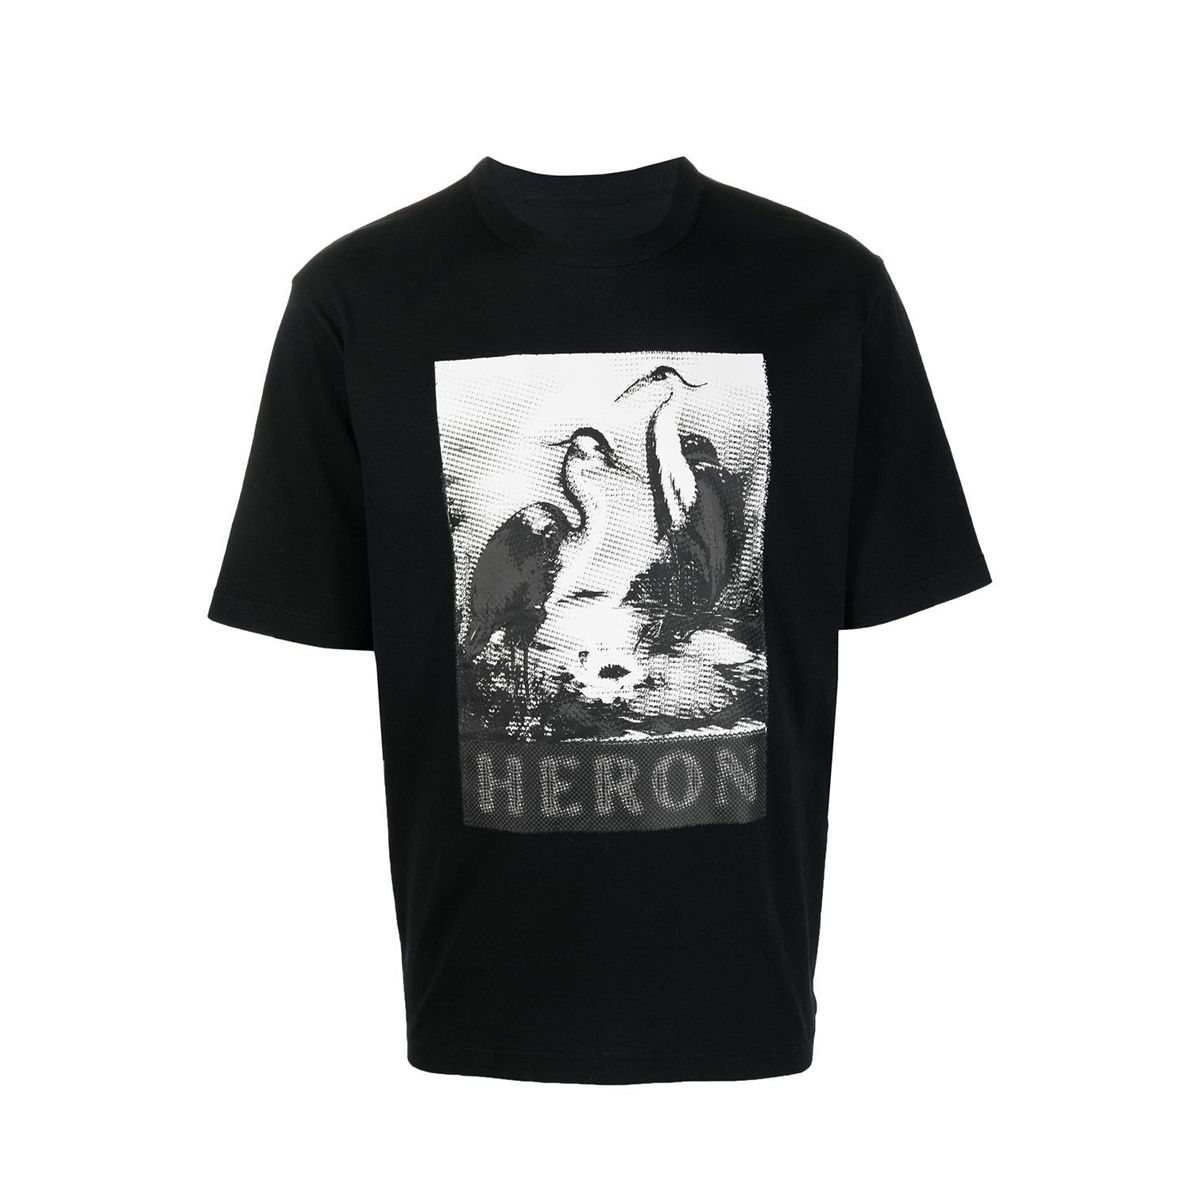 Heron Print Black T-Shirt